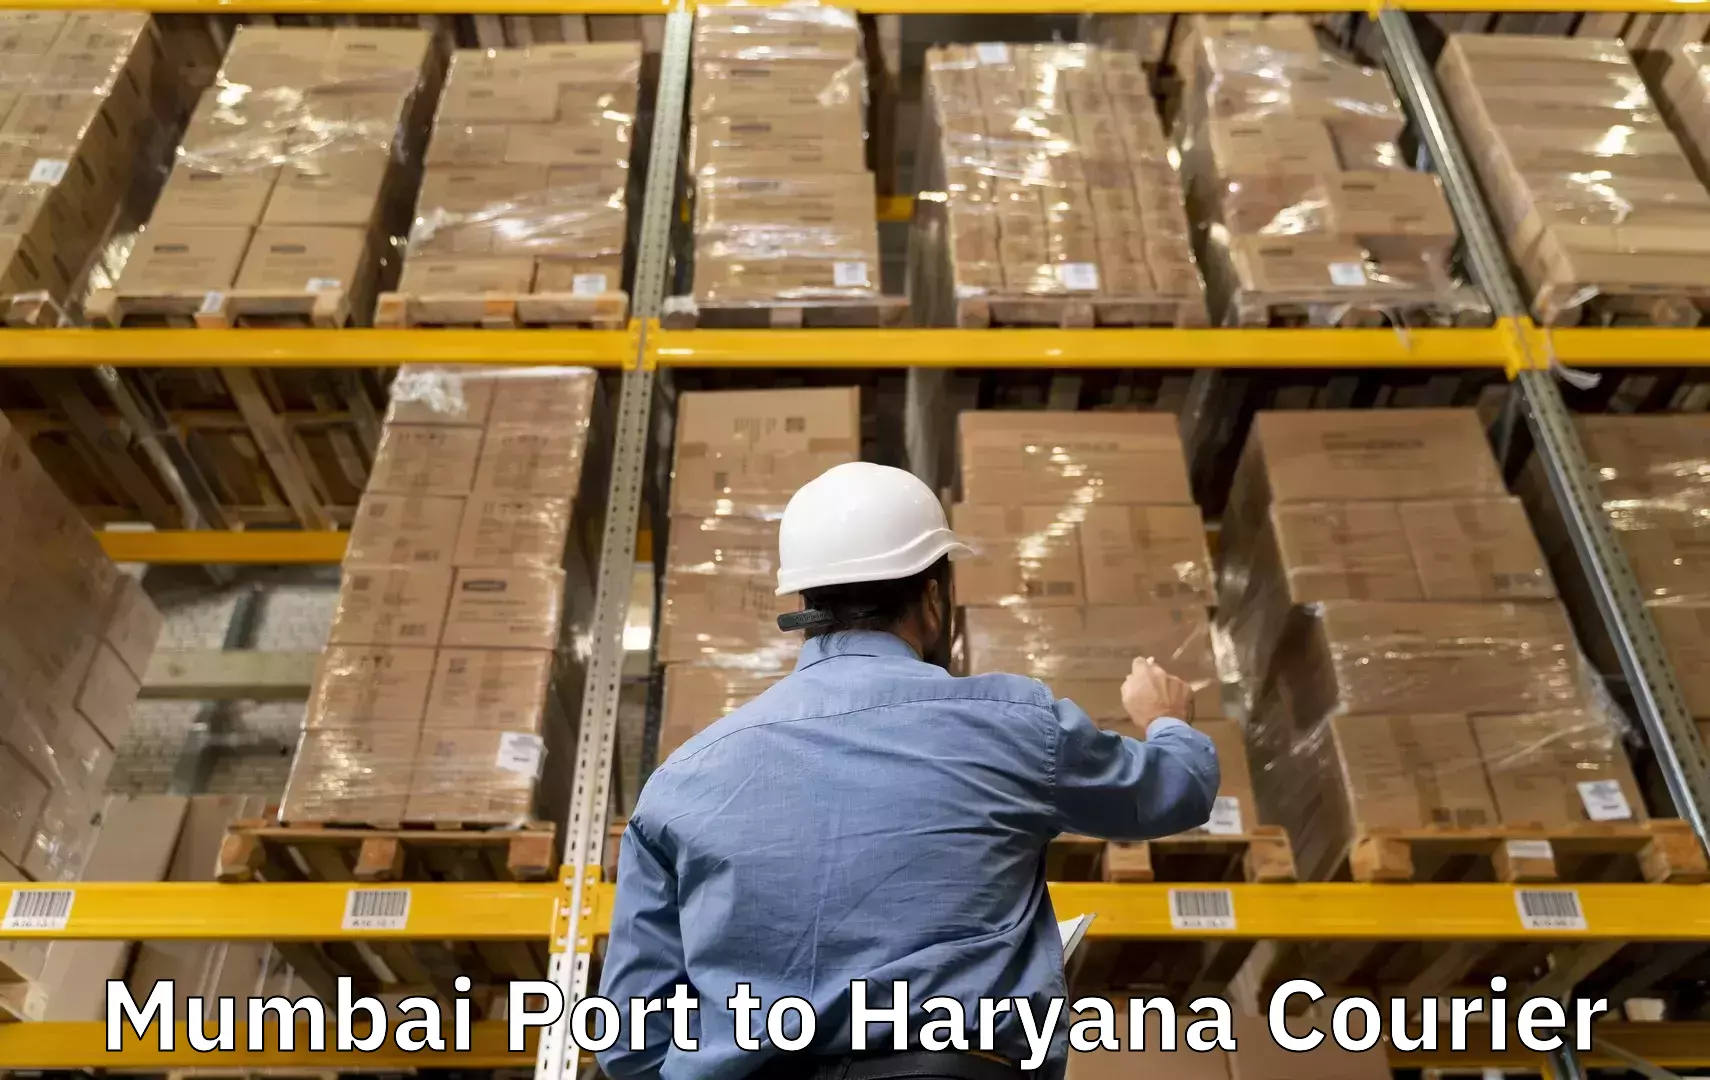 Hassle-free luggage shipping in Mumbai Port to NCR Haryana